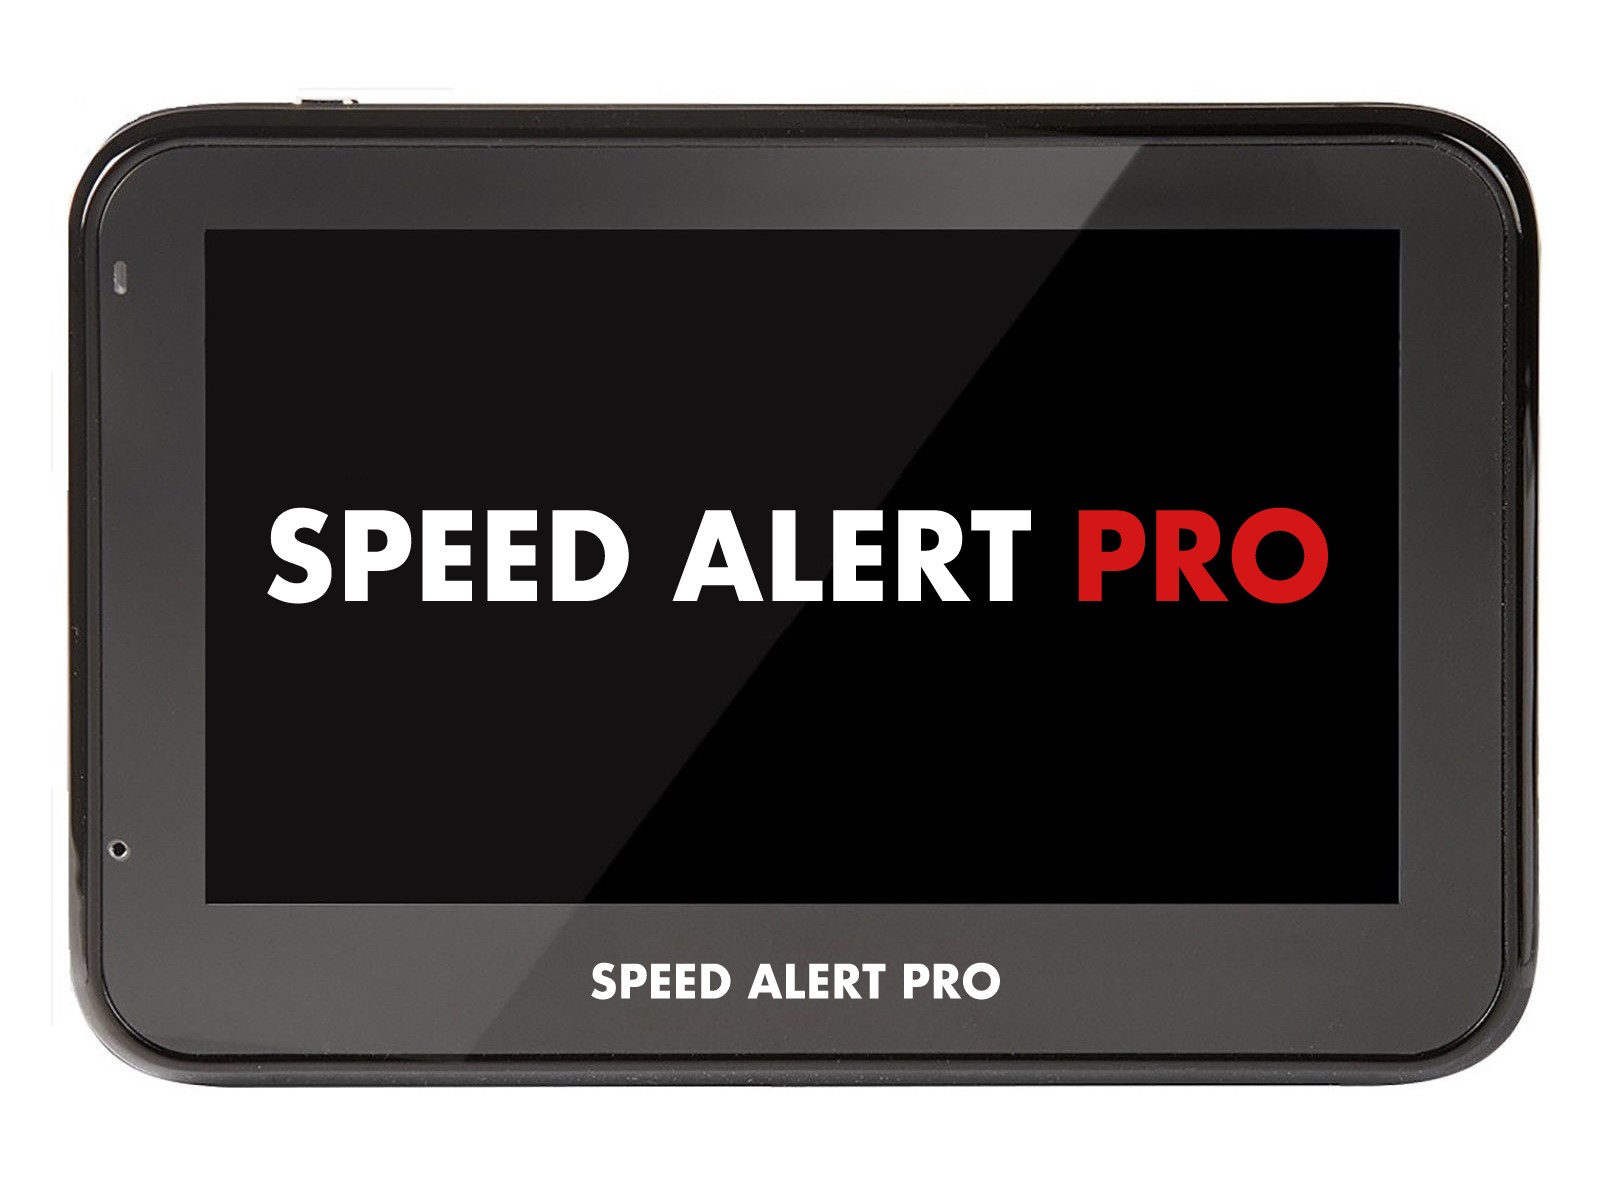 SPEED ALERT PRO = Over-Speed Limit Warning Device